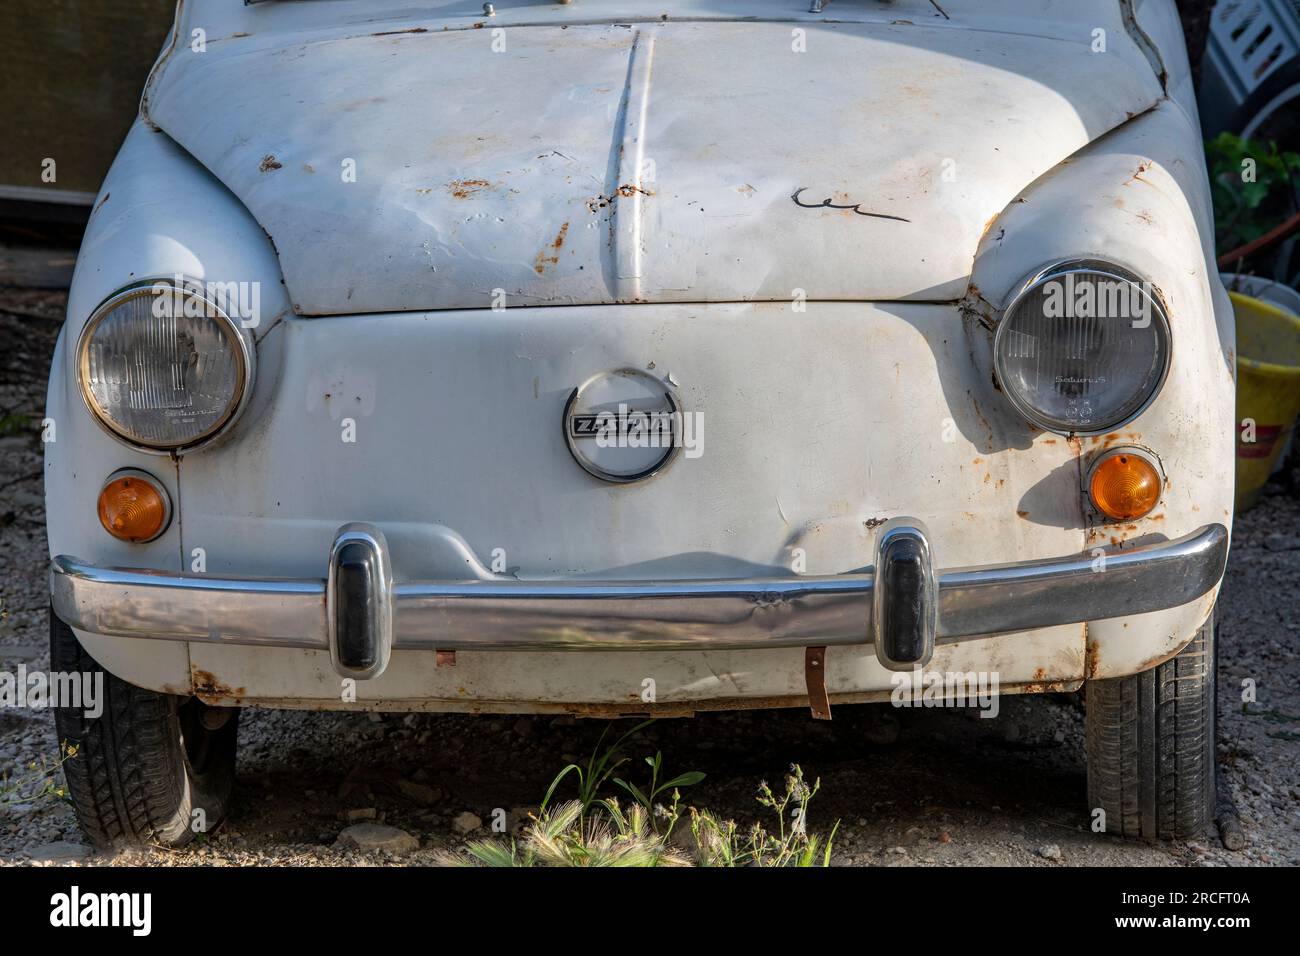 front of old rusty zastava motor car, vintage zastava car, bonnet hood of eastern european zastava motor car. Stock Photo